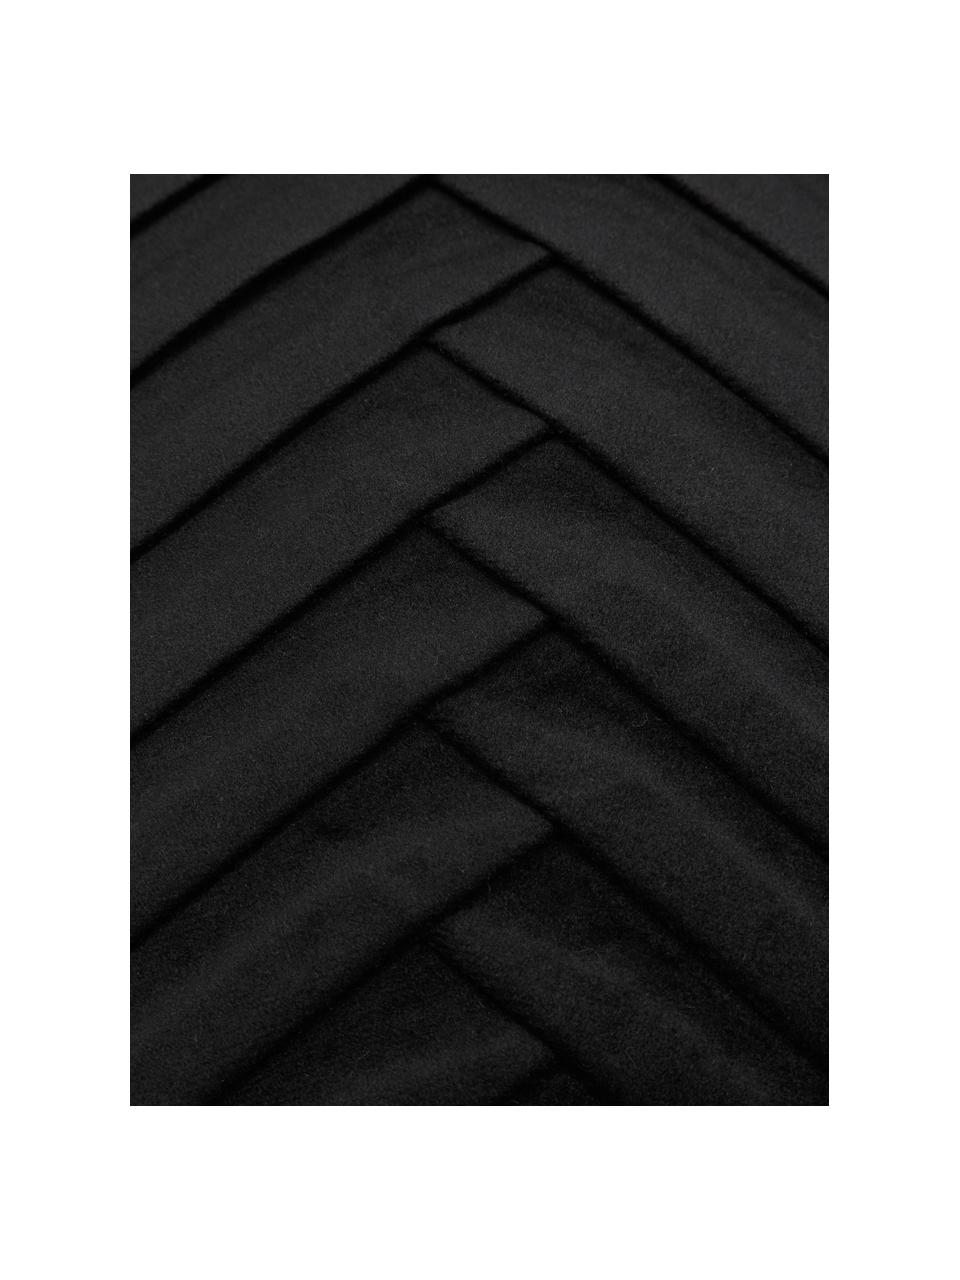 Fluwelen kussenhoes Lucie in zwart met structuur-oppervlak, 100% fluweel (polyester), Zwart, B 30 x L 50 cm